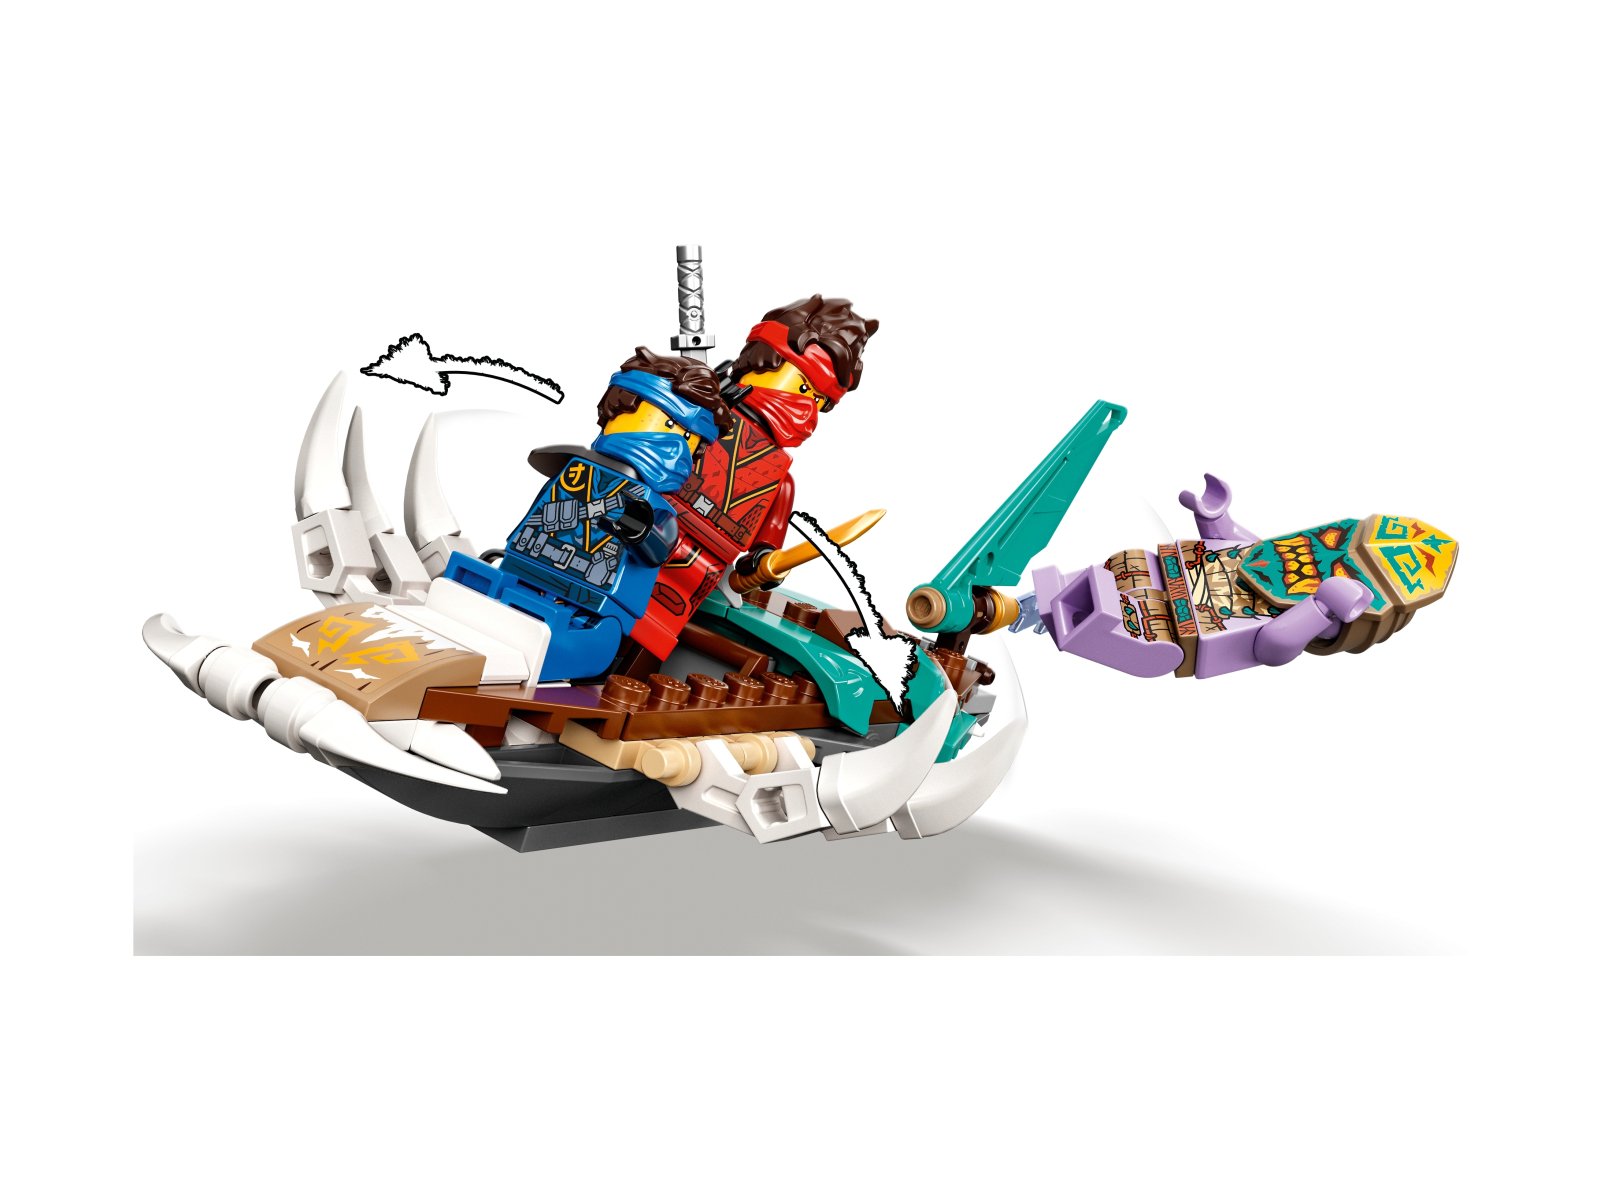 LEGO Ninjago 71748 Morska bitwa katamaranów